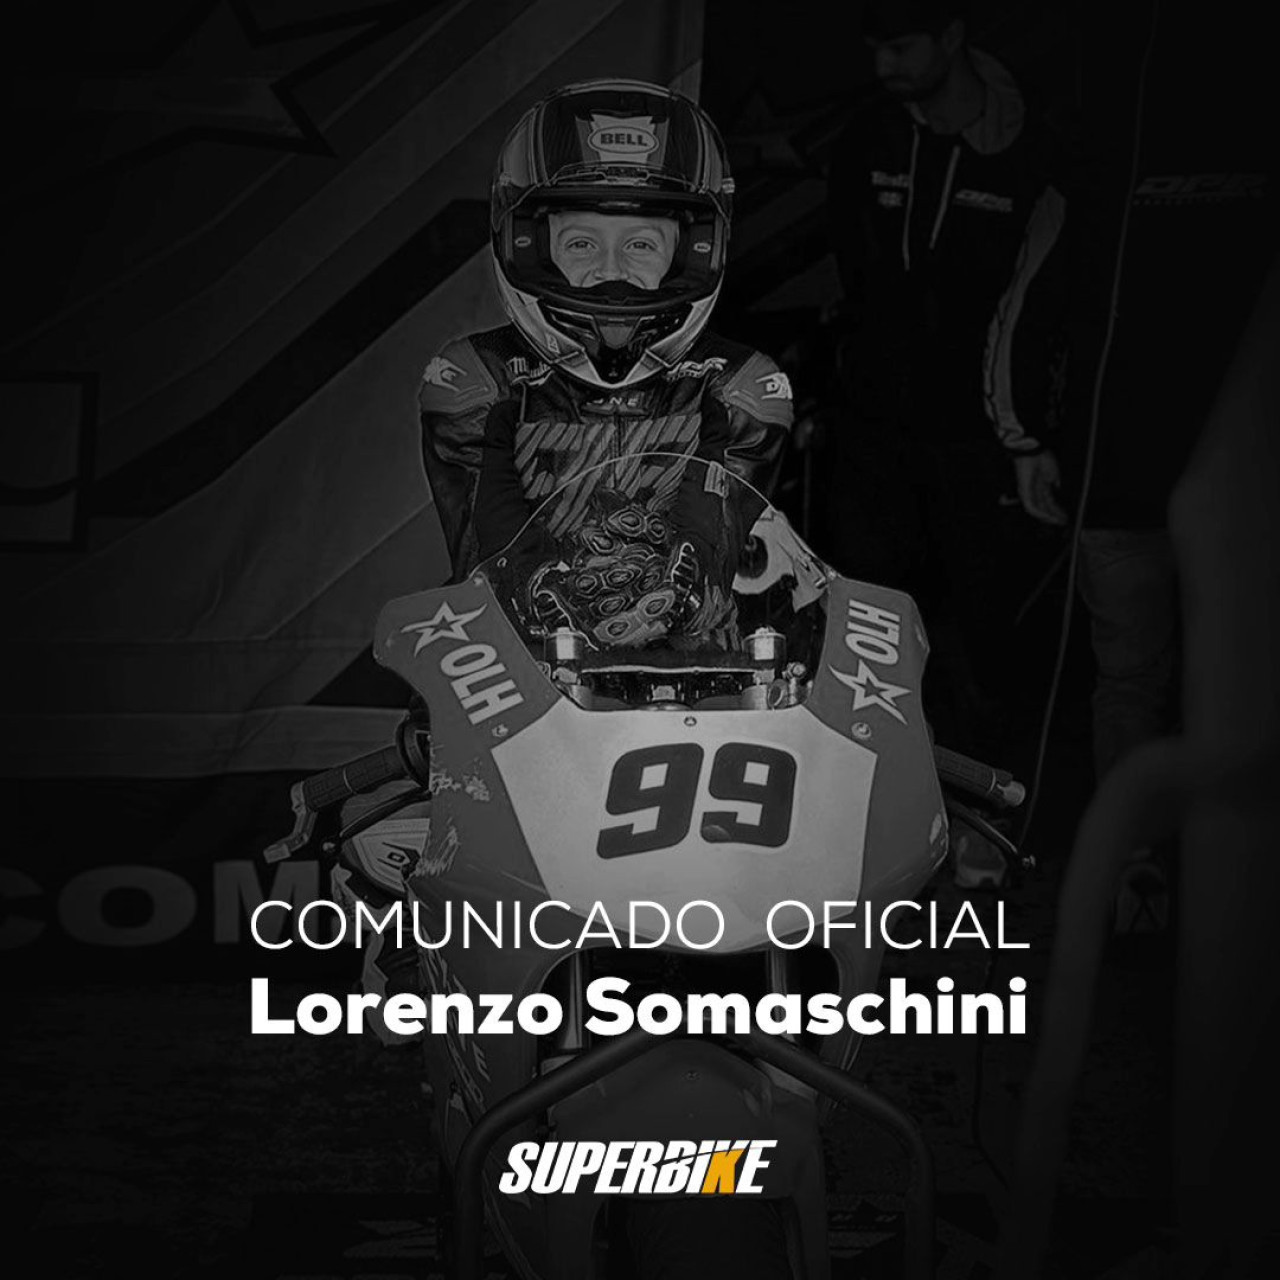 Lorenzo Somaschini, piloto fallecido. Foto: Instagram.